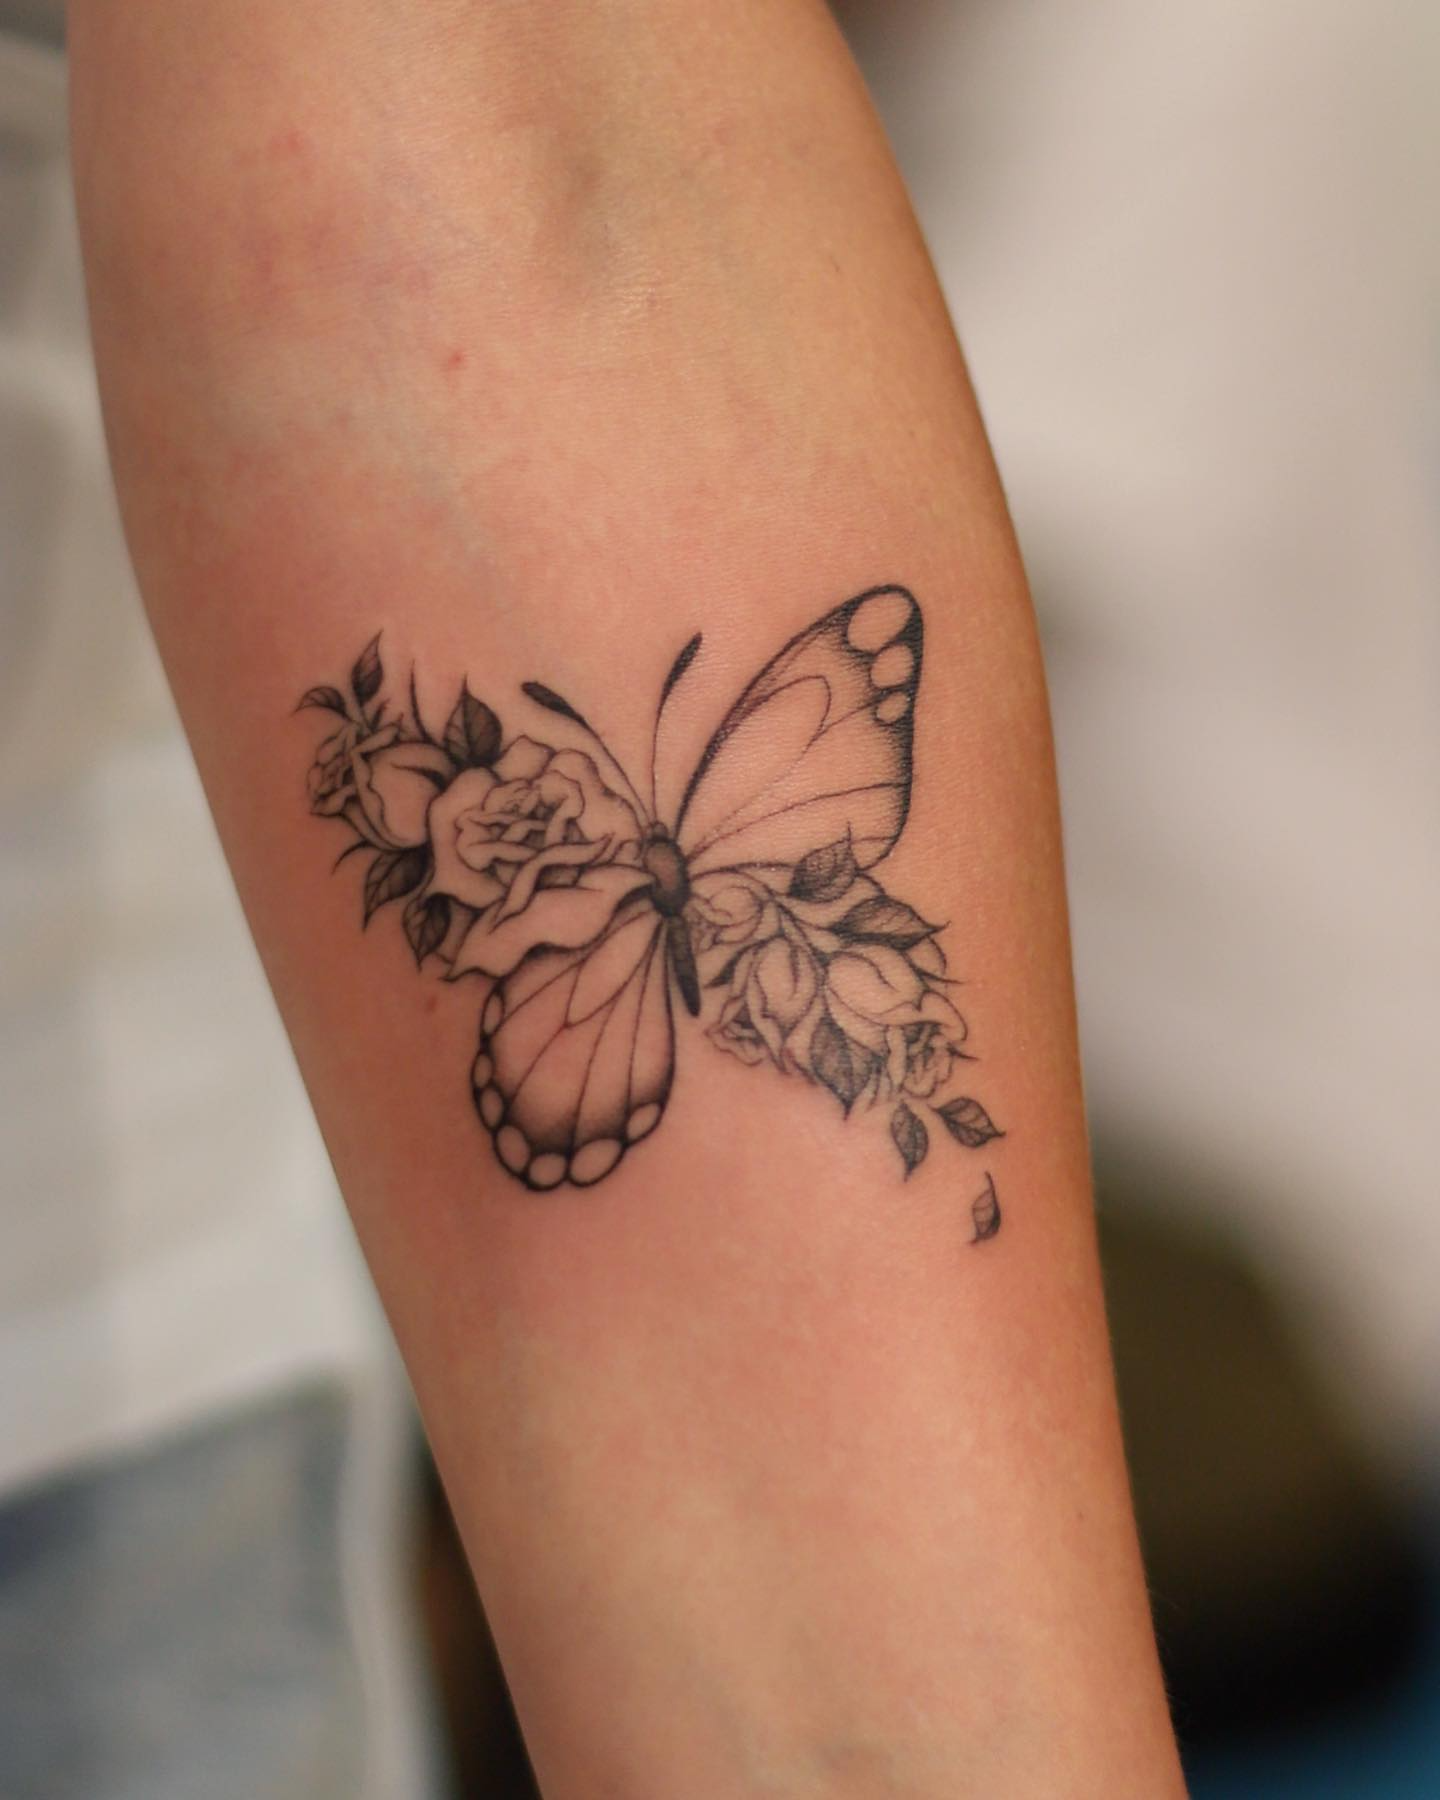 Rose Tattoo Ideas